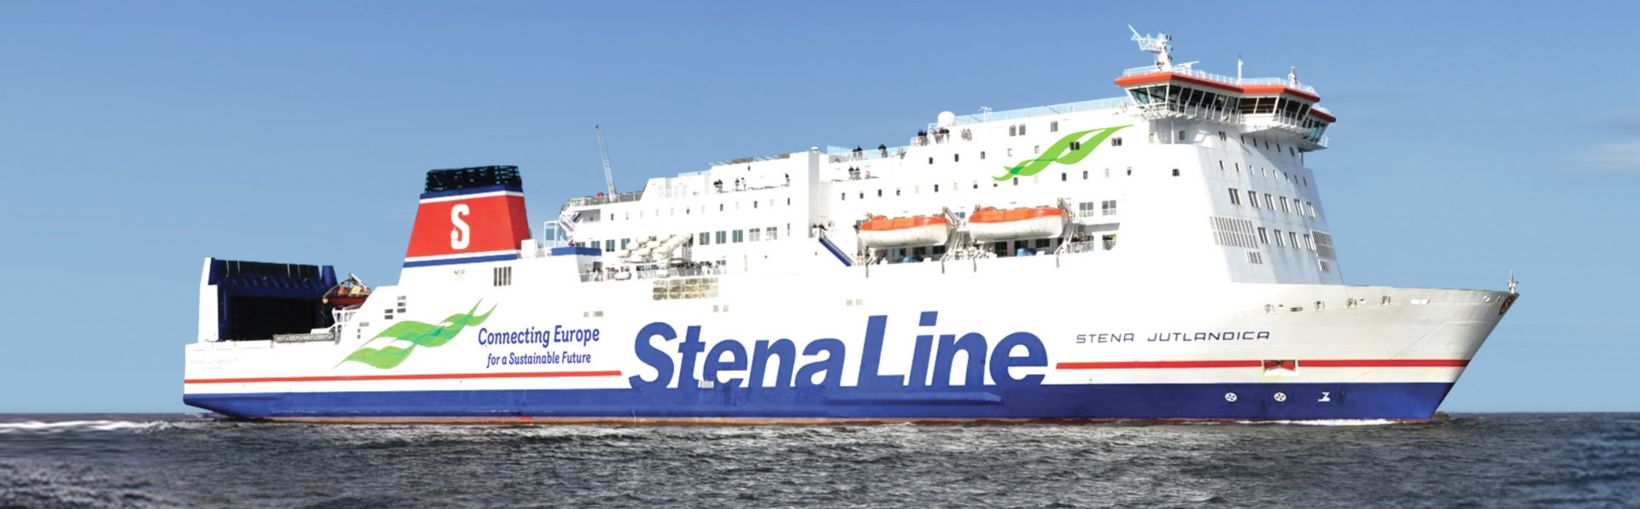 Stena Jutlandica ferry en mer